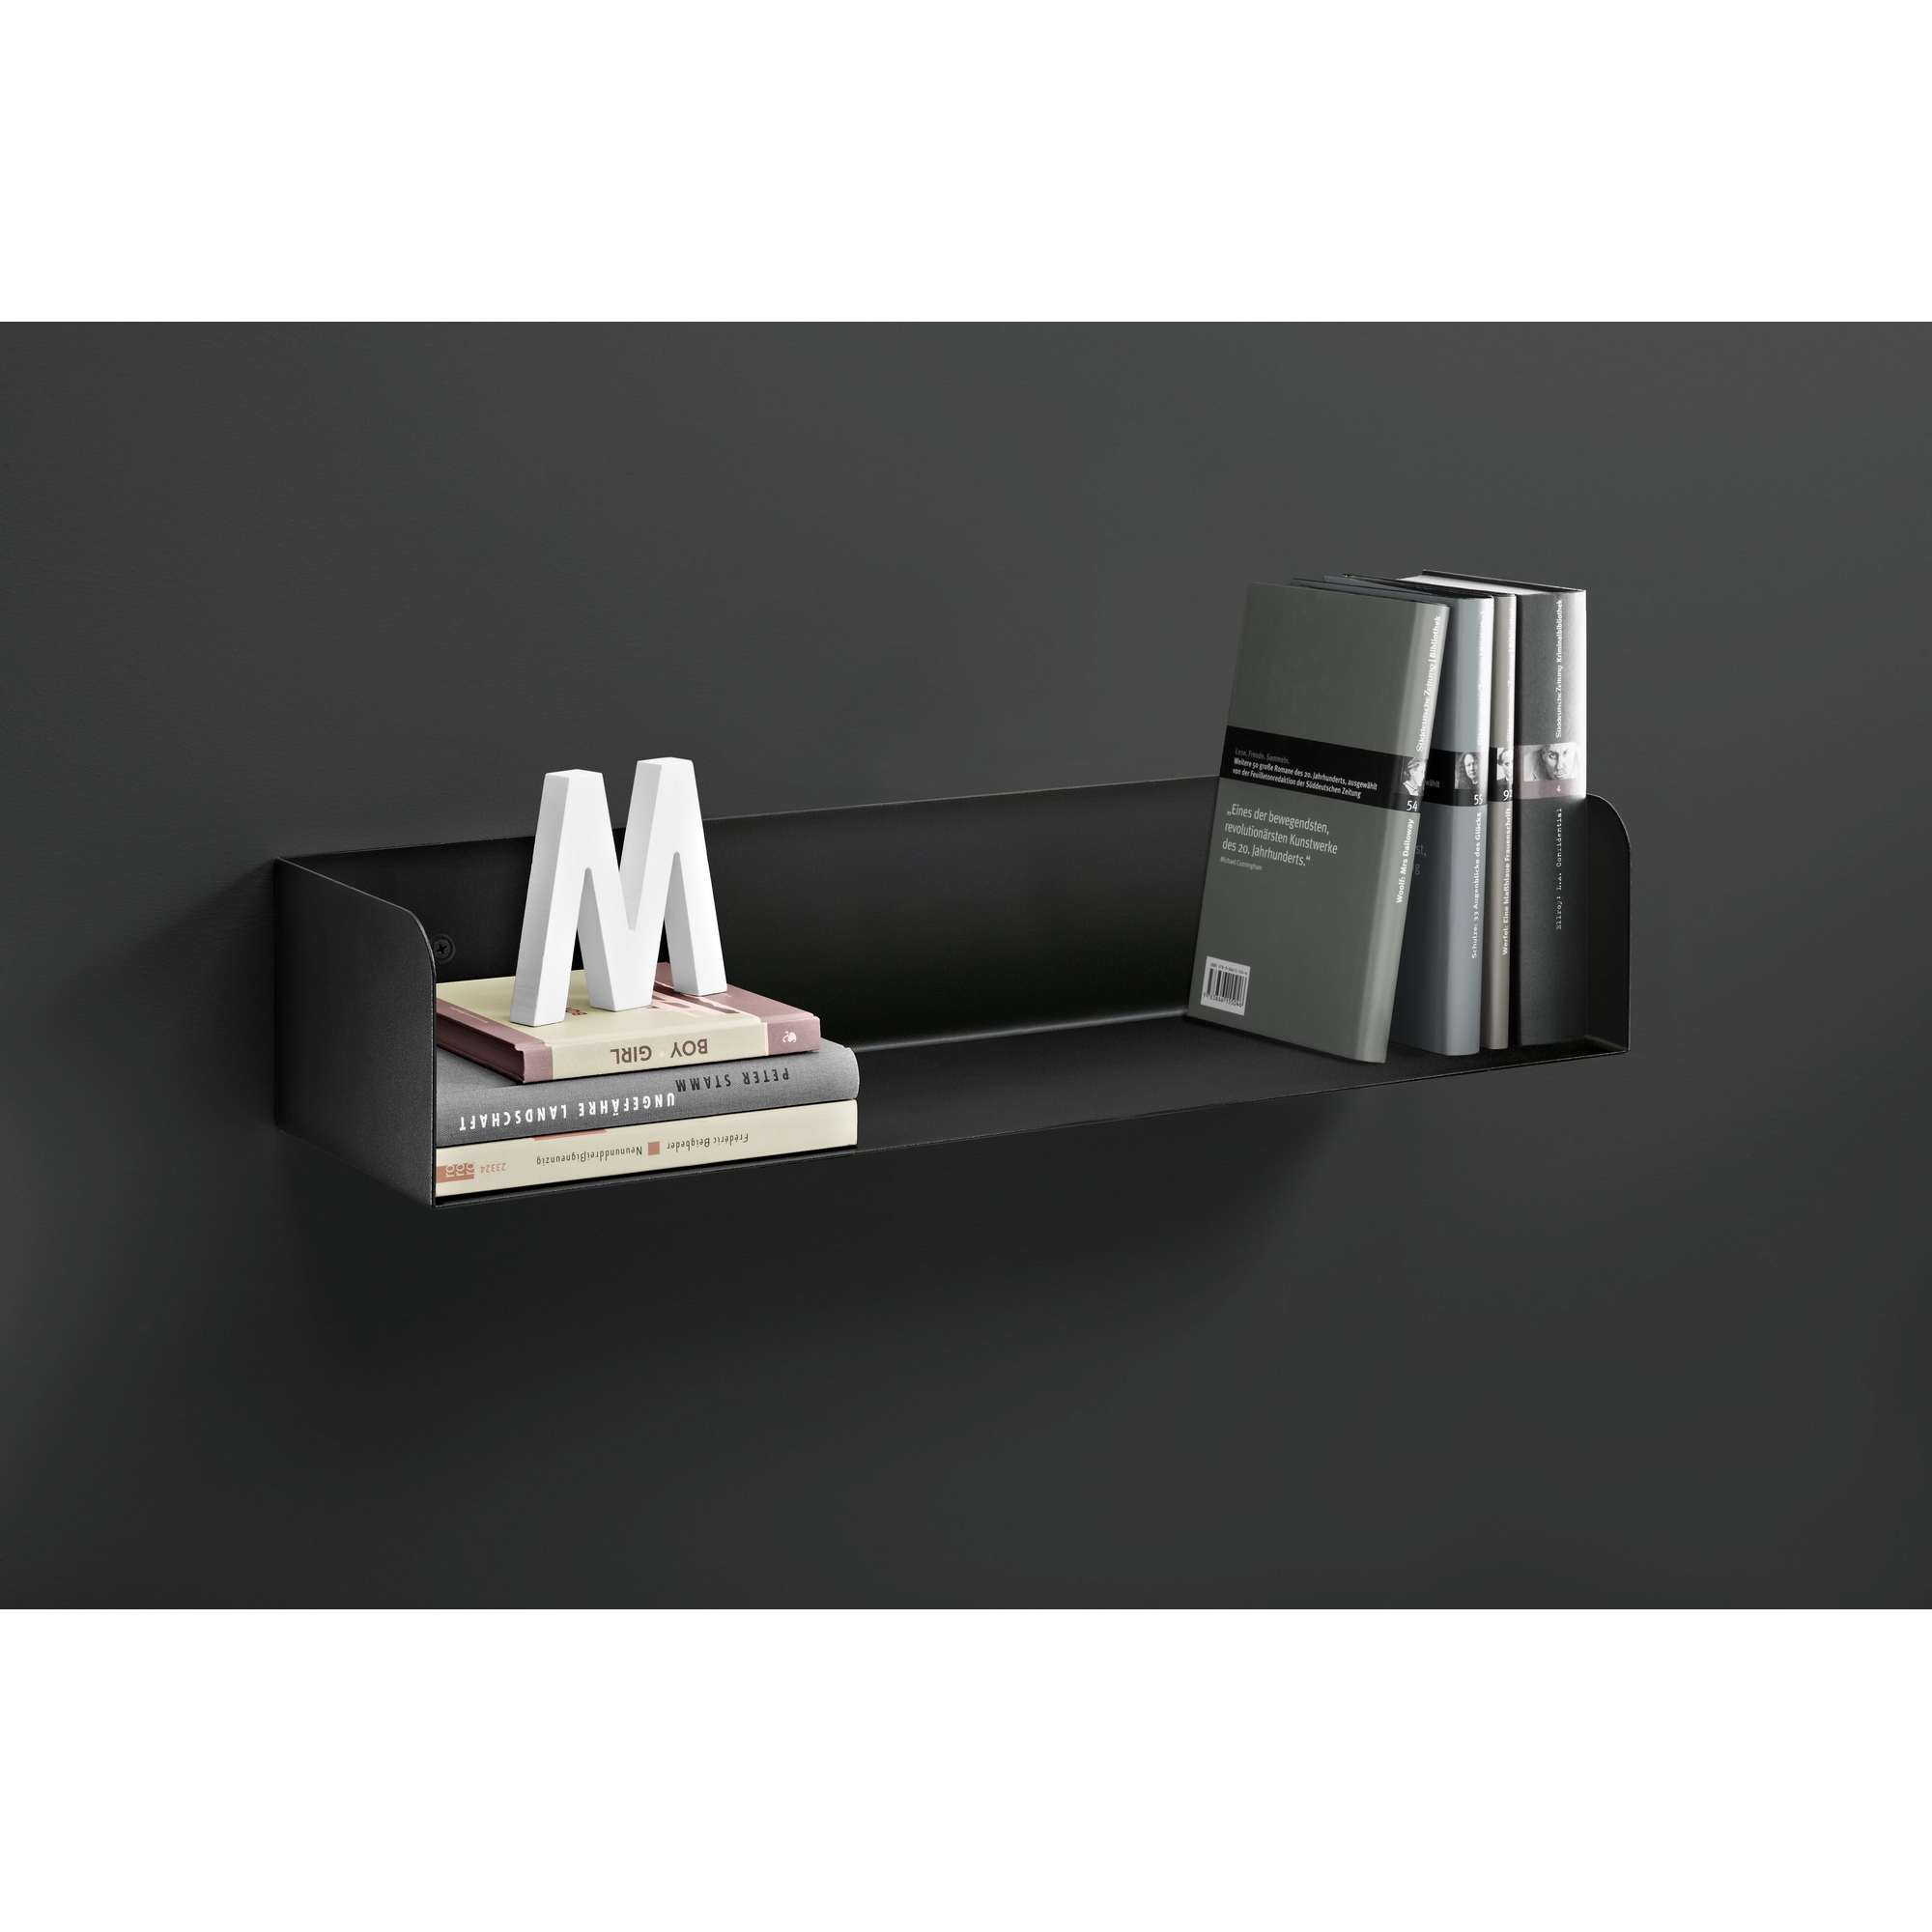 Wandregal 'Shelf+ Showcase' schwarz 600 x 150 x 115 mm + product picture